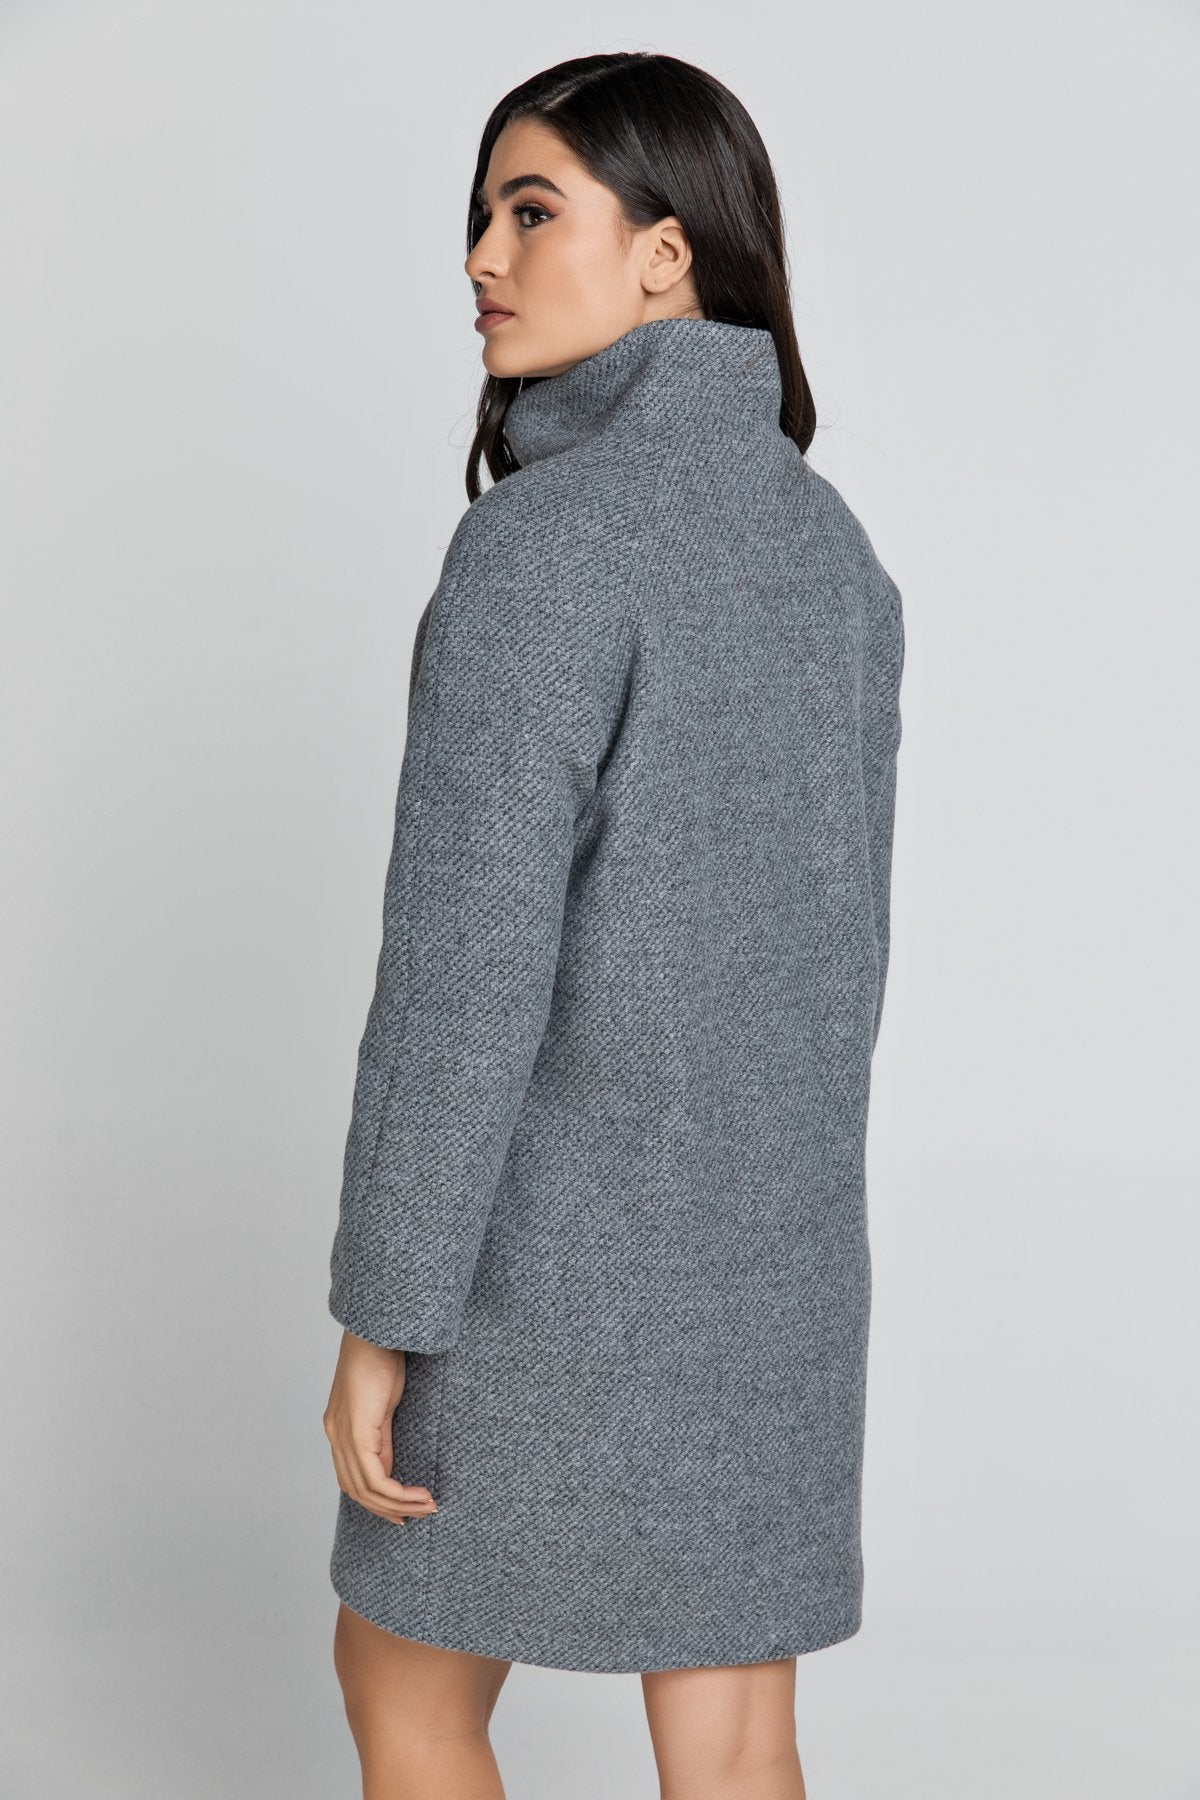 Wool Blend Grey Coat by Conquista Fashion